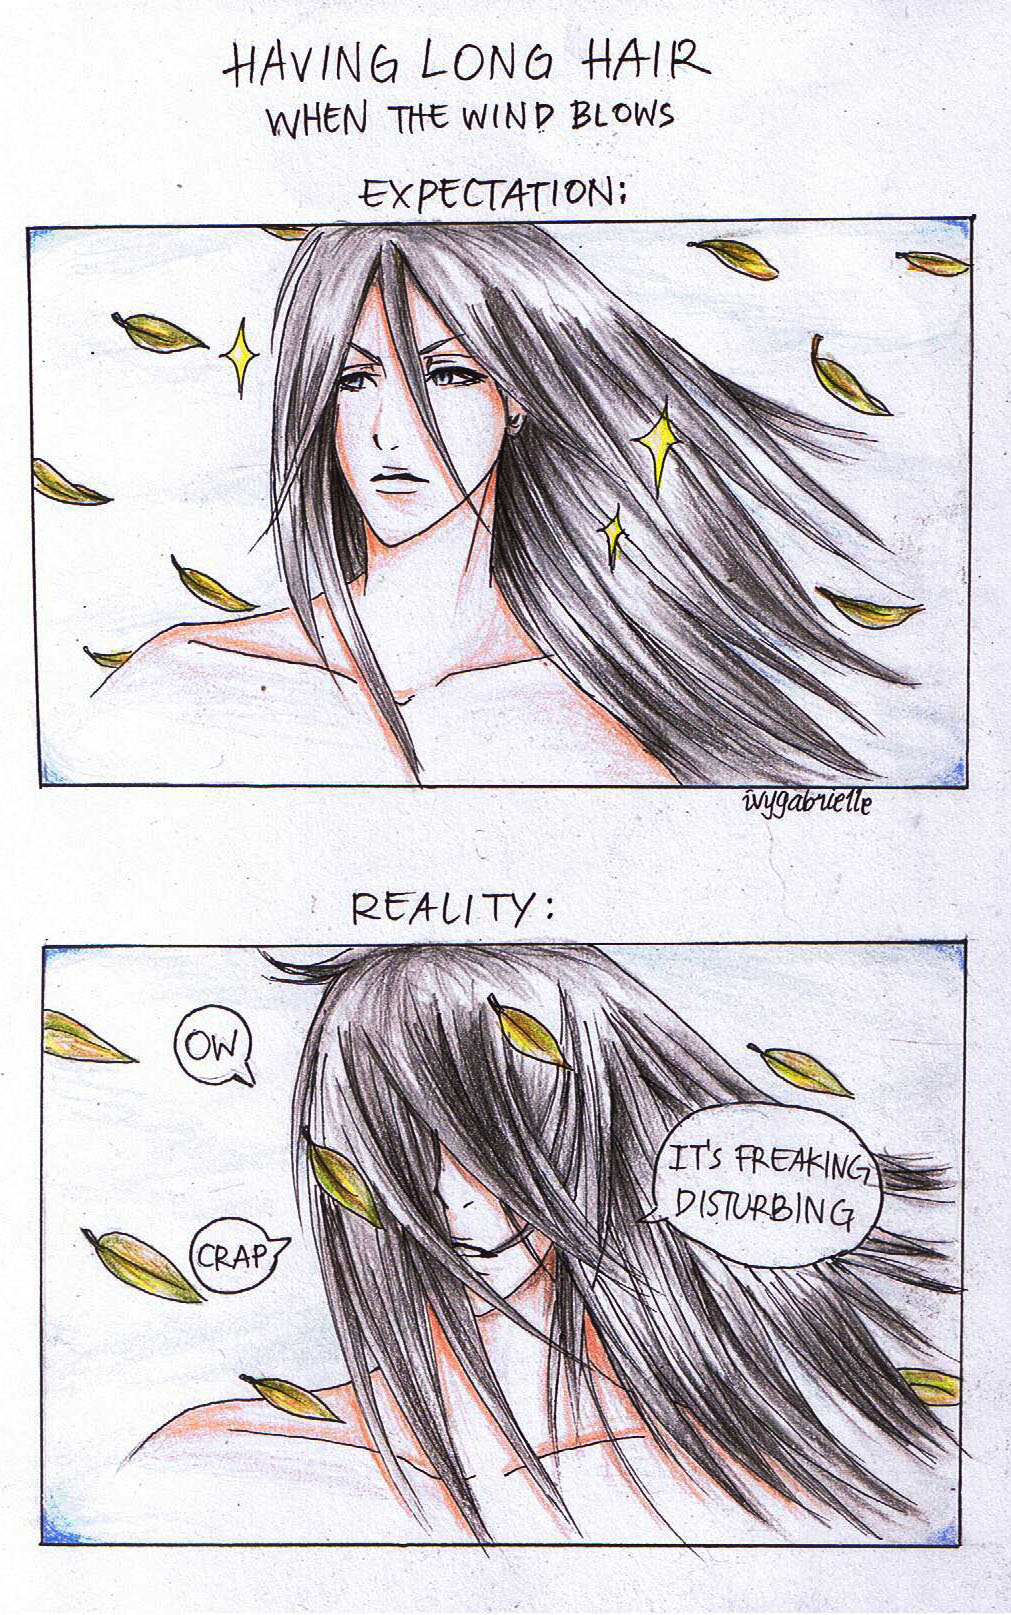 Expectation vs reality - long hair by drakes999 on DeviantArt